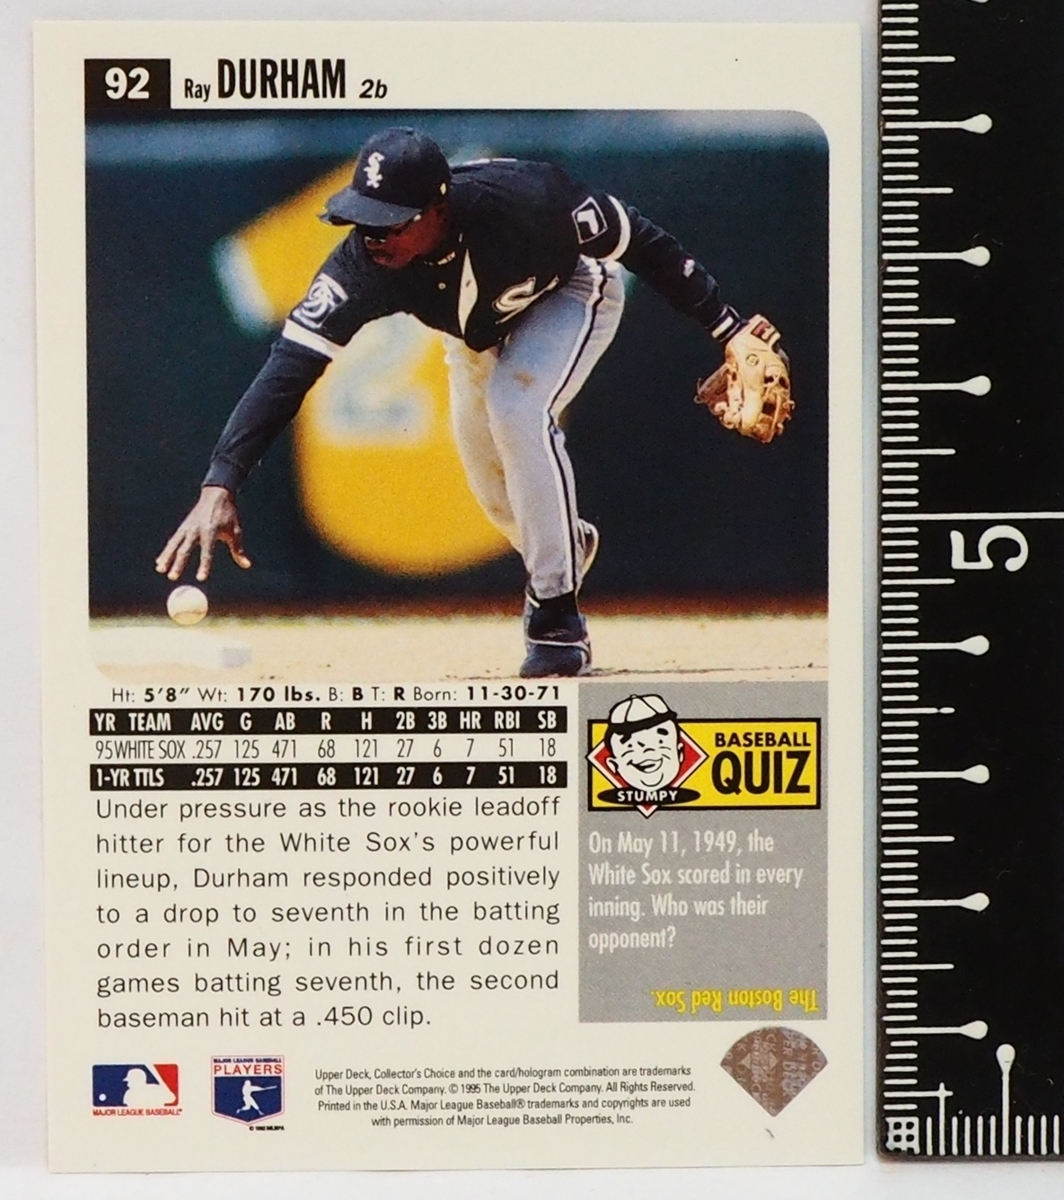 1996 Upper Deck Collector's Choice #92【Ray Durham(White Sox)】96年MLBメジャーリーグ野球カードBaseball Cardアッパーデック 送料込_画像2